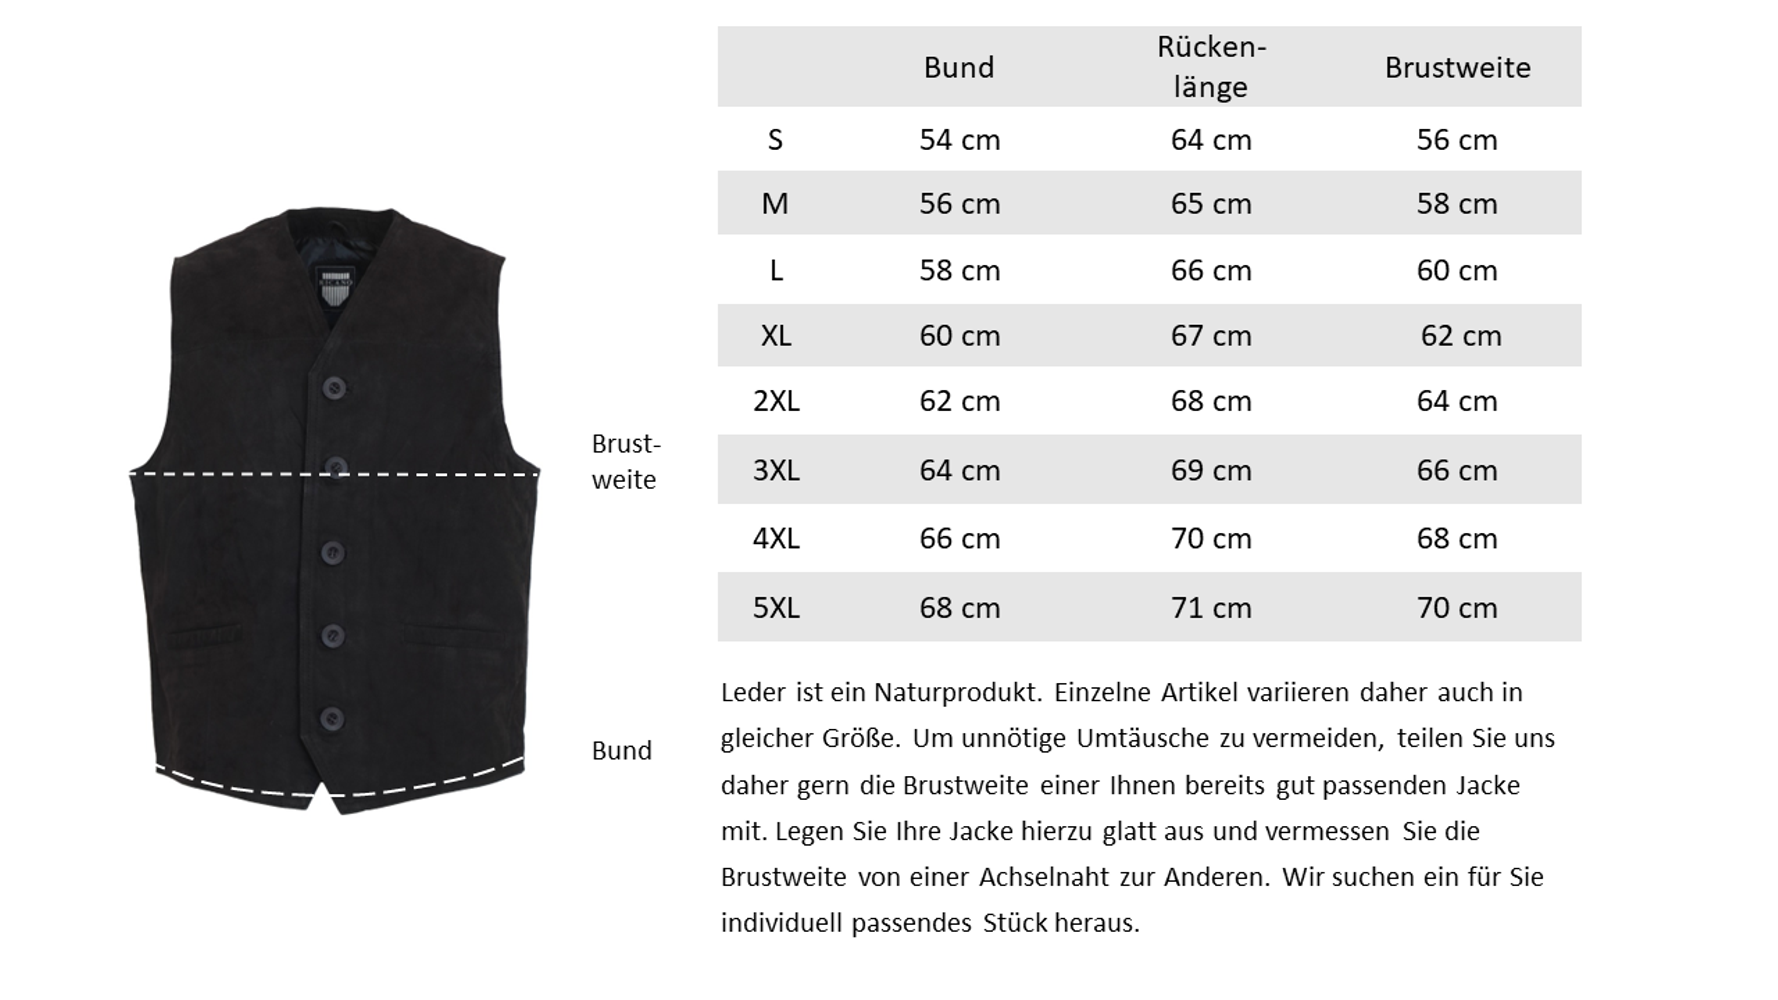 Men's leather vest Vest 321, Black (suede) in 6 colors, Bild 7